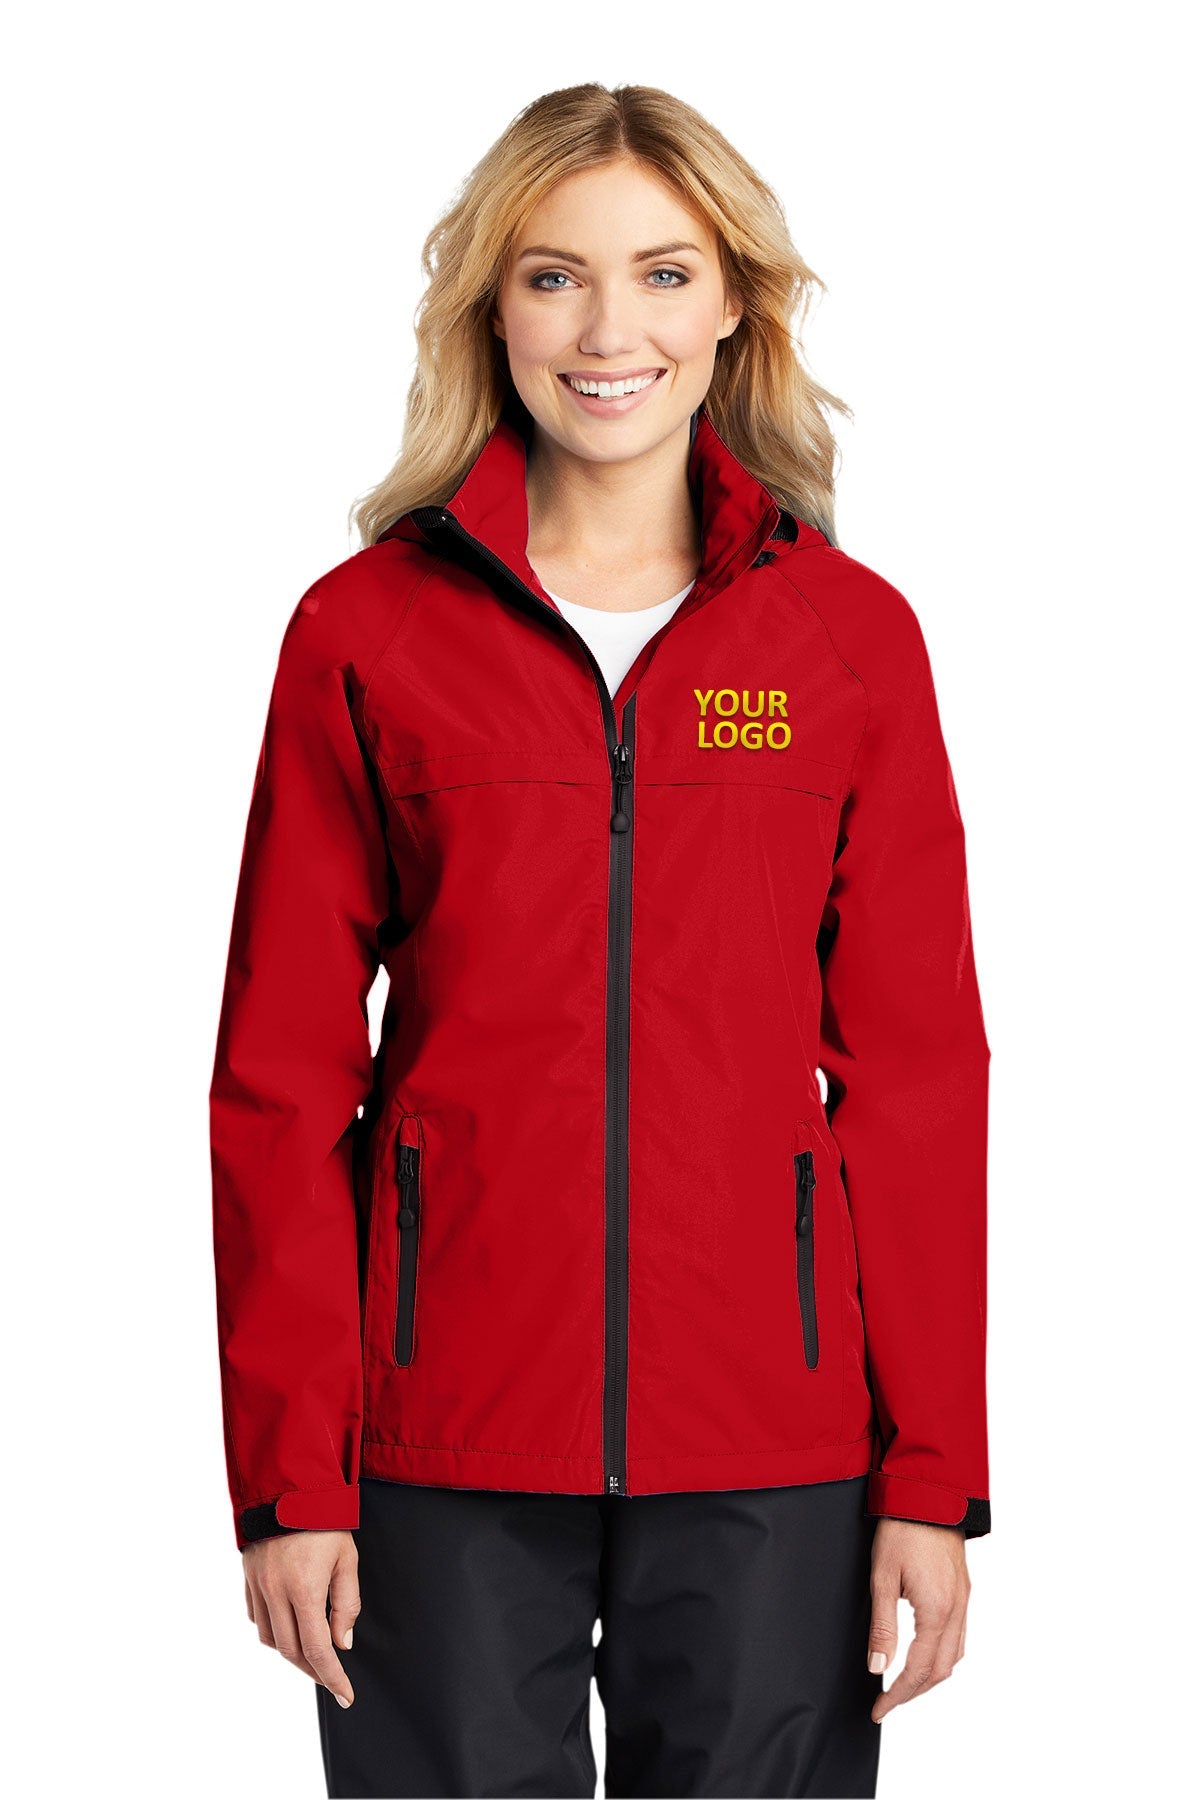 Port Authority Deep Red L333 custom logo jackets